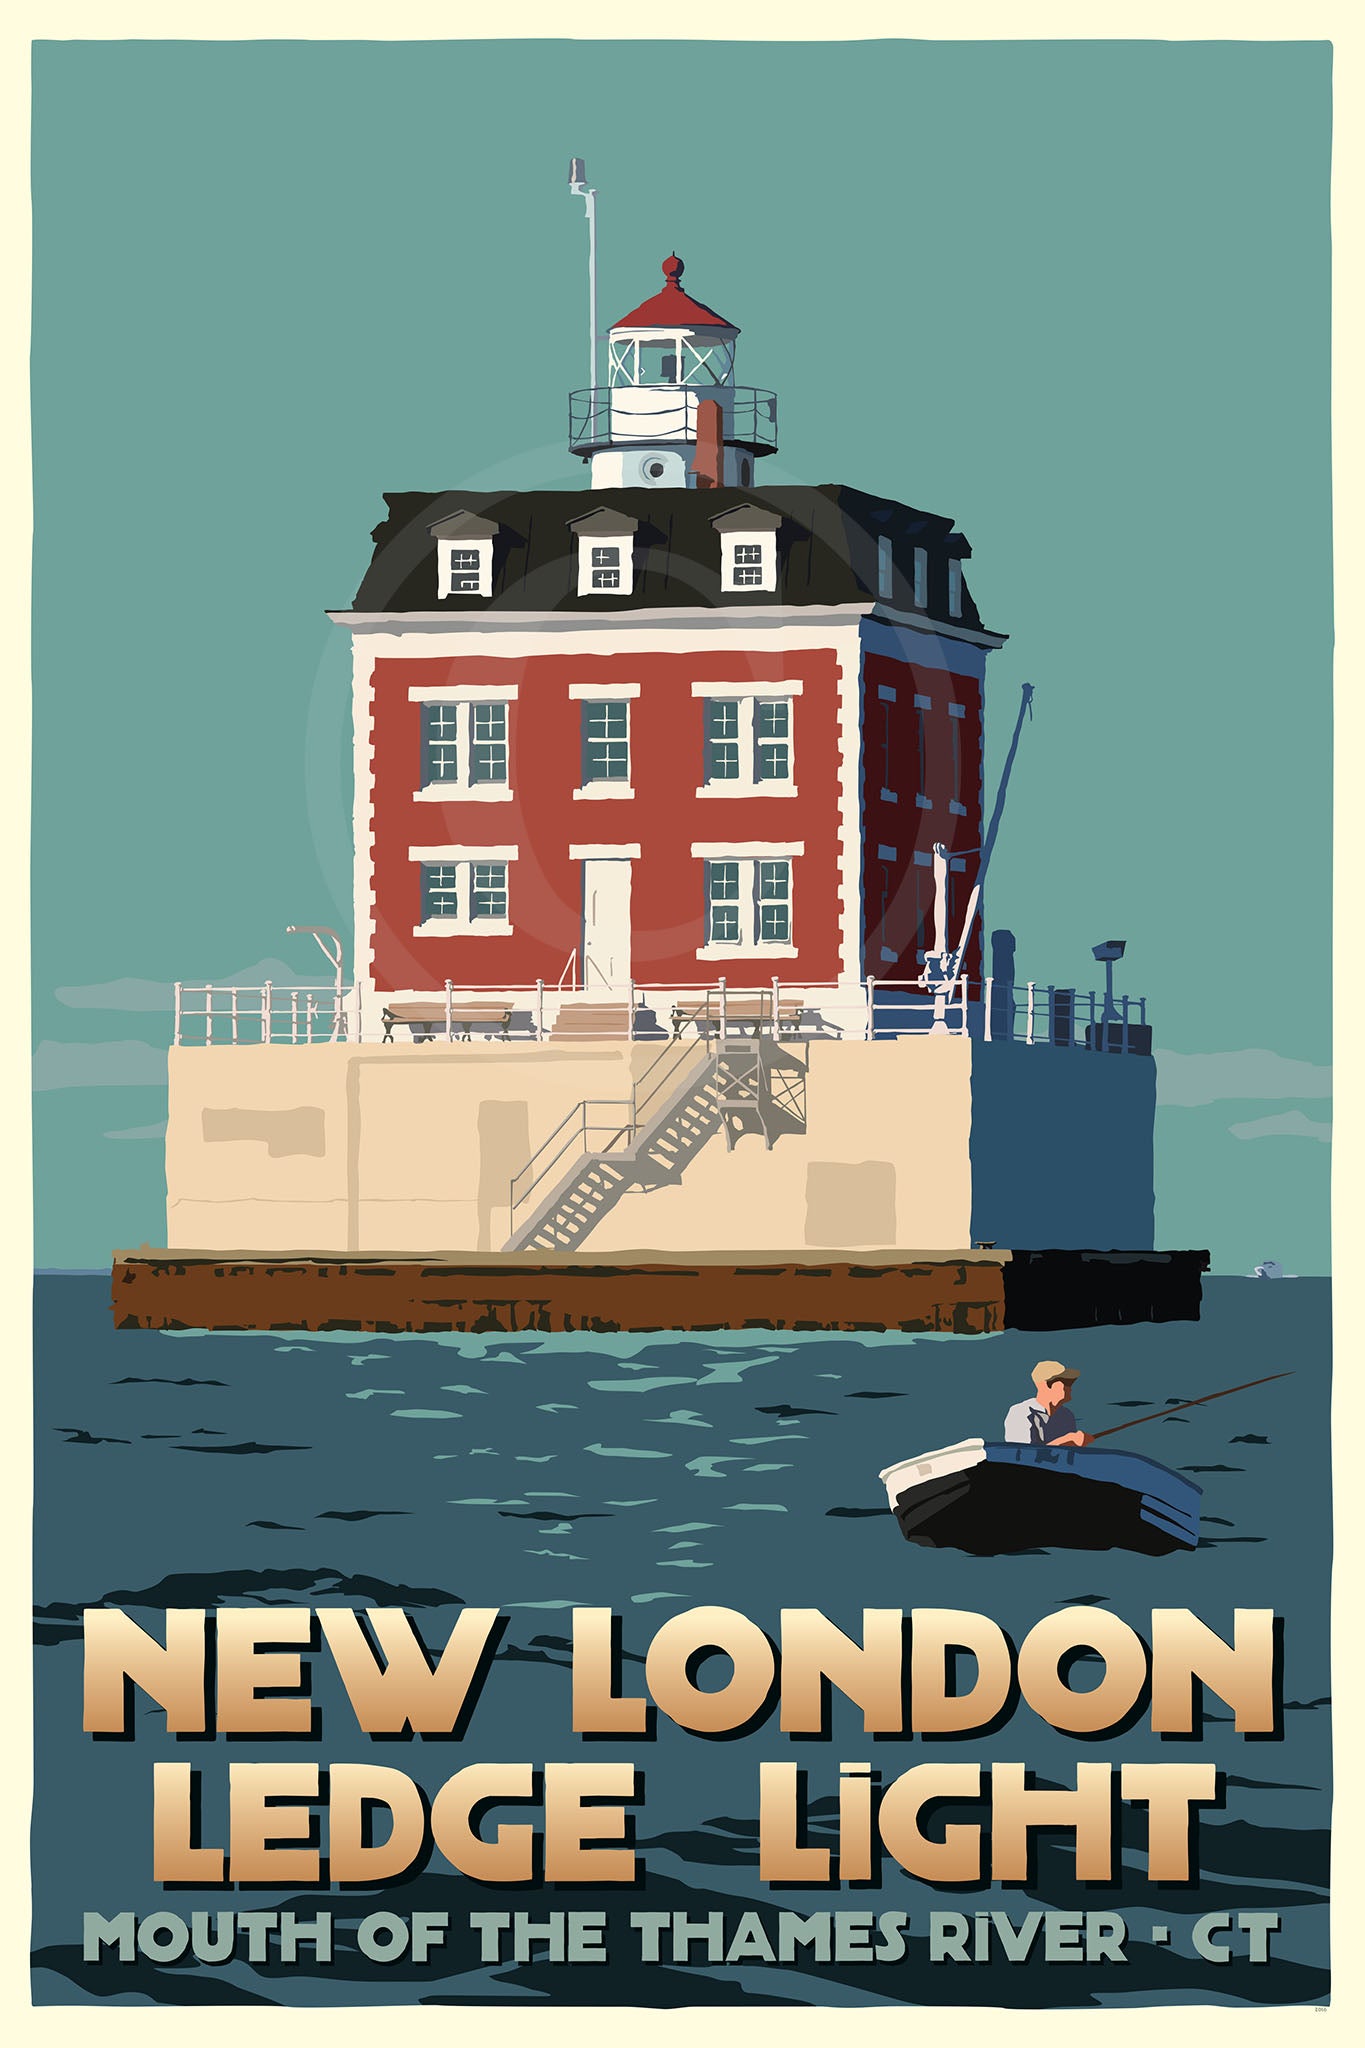 New London Ledge Light Art Print 24" x 36" Travel Poster By Alan Claude - Connecticut